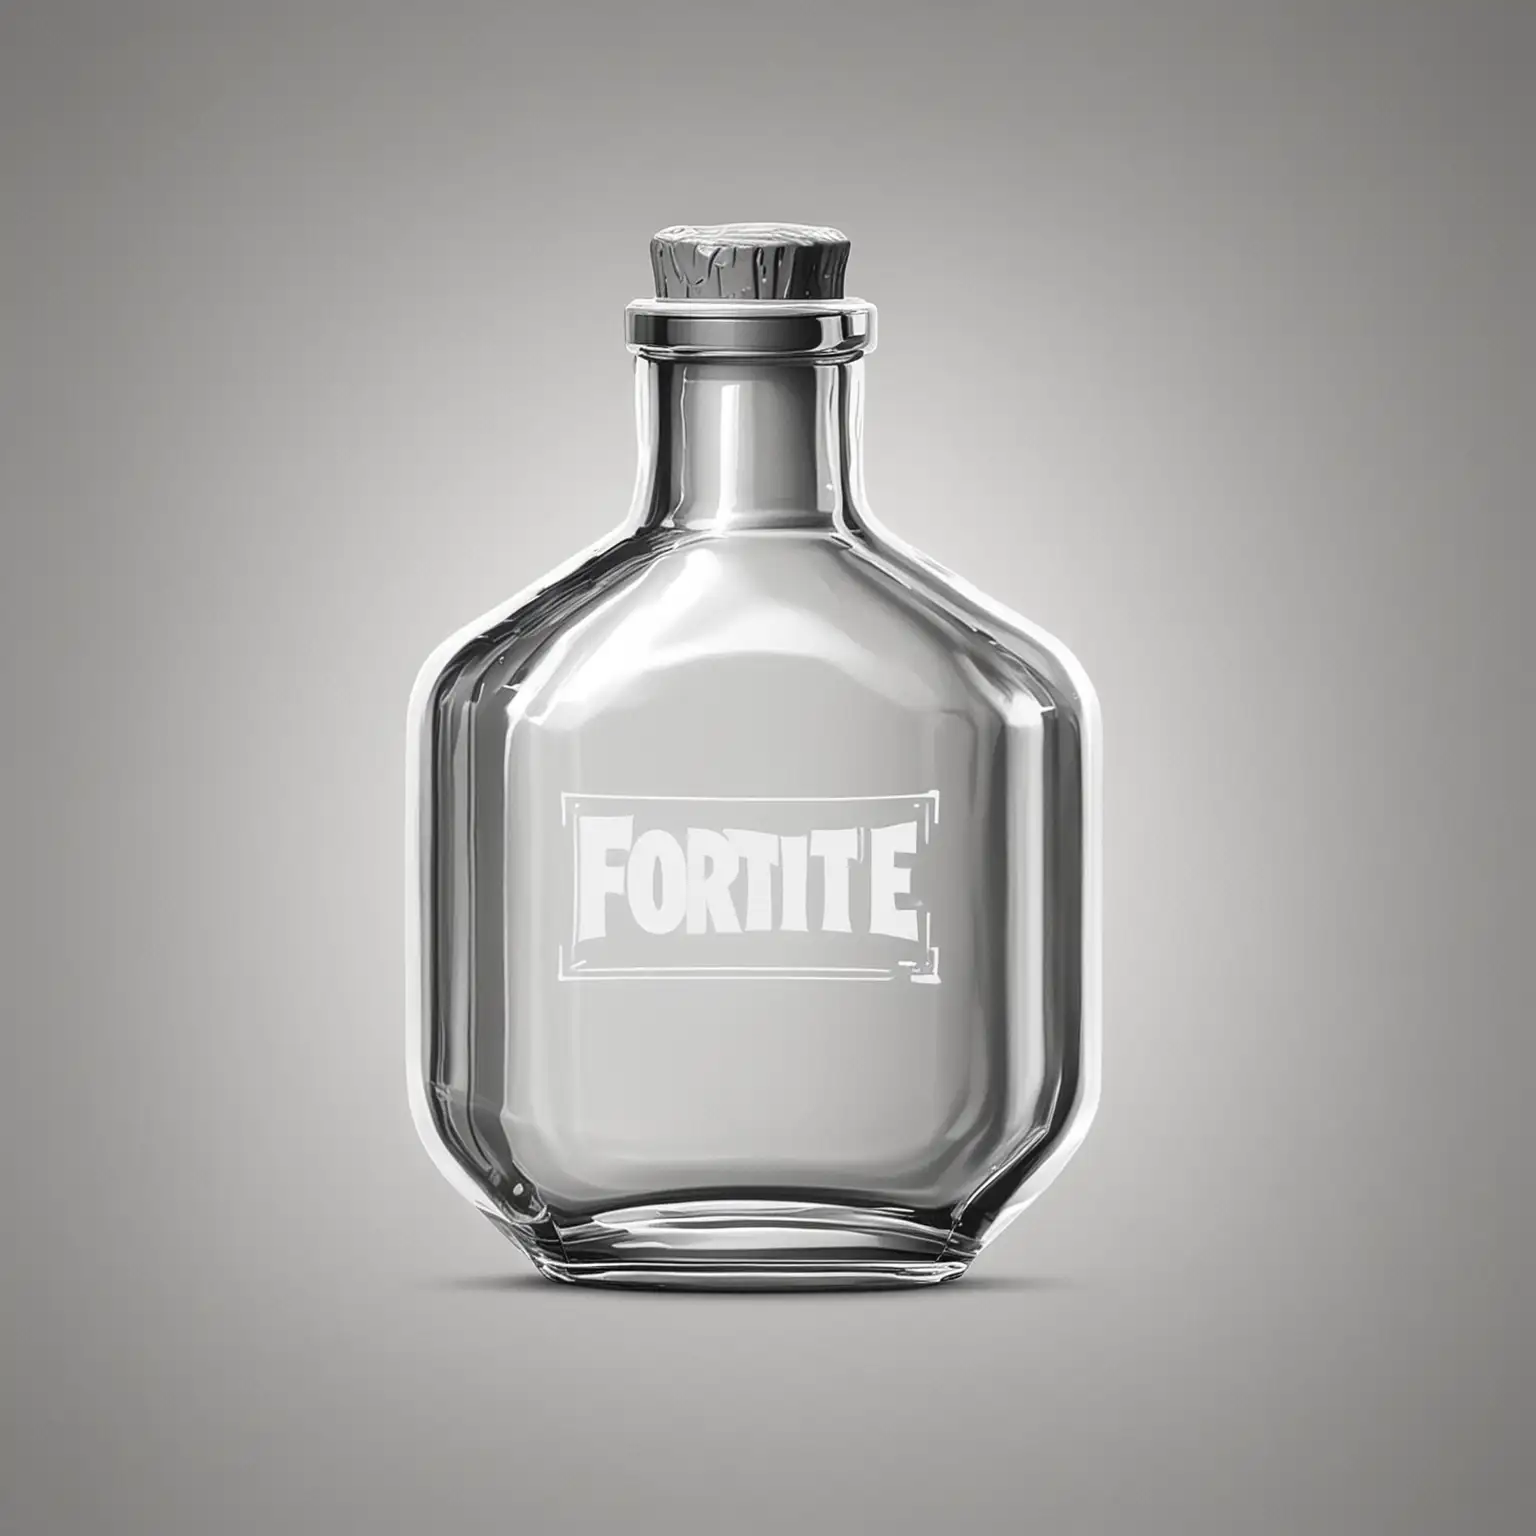 Fortnite Potion Coloring Page Short and Wide Bottle Design